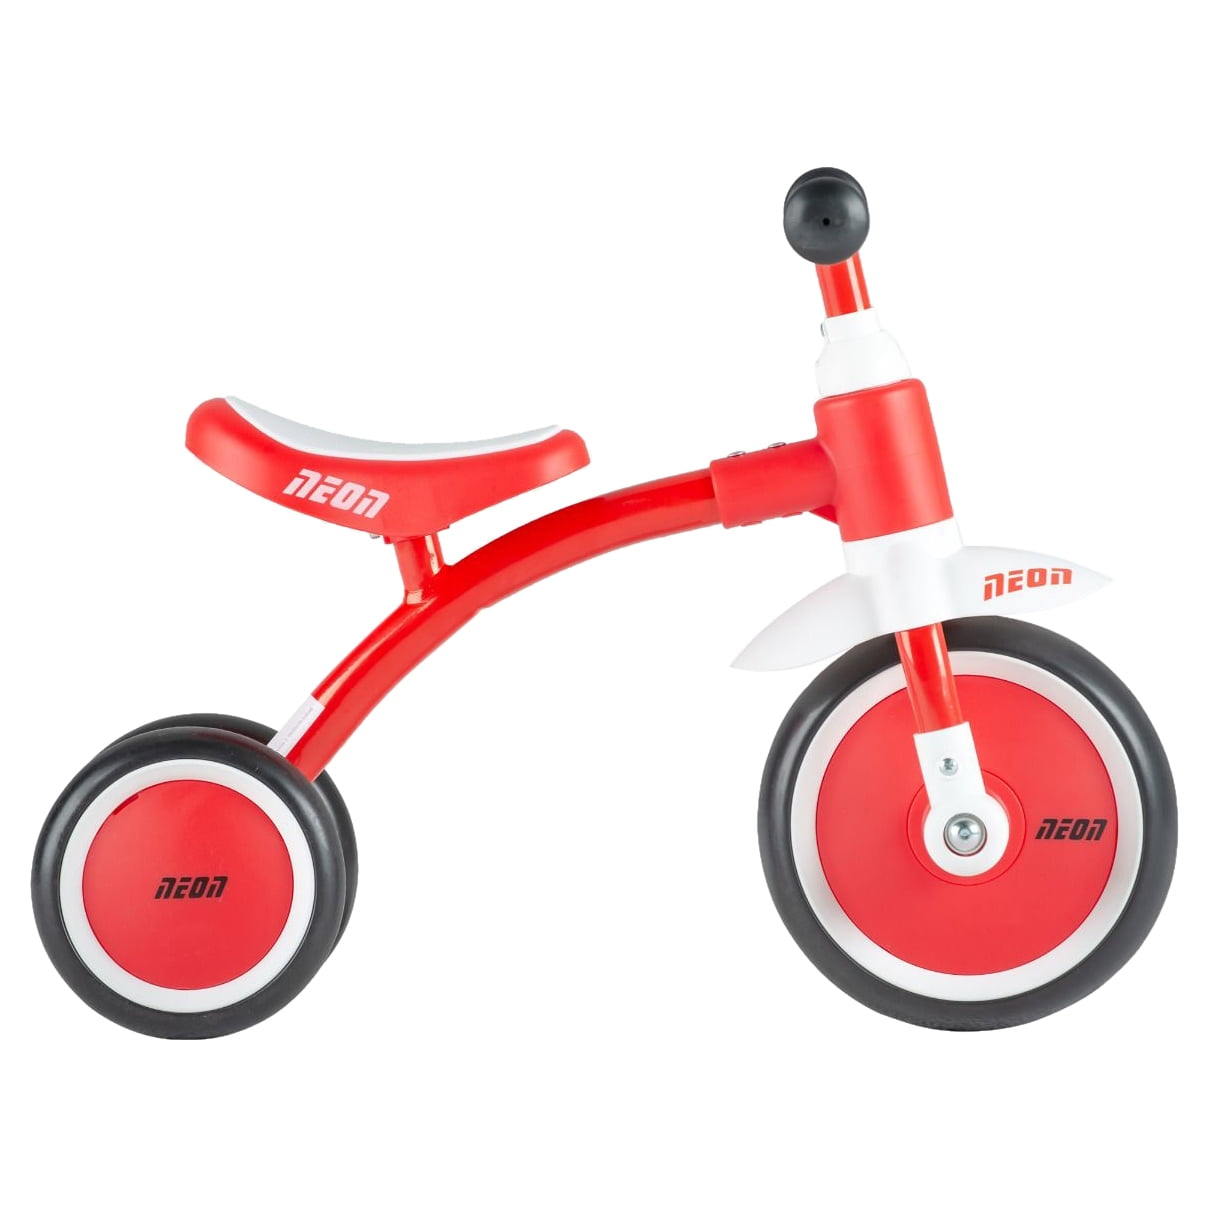 Kids Bike Ride Push Toy Wheels Riding Walk Fun Game Red Children Boy Kid Gift 